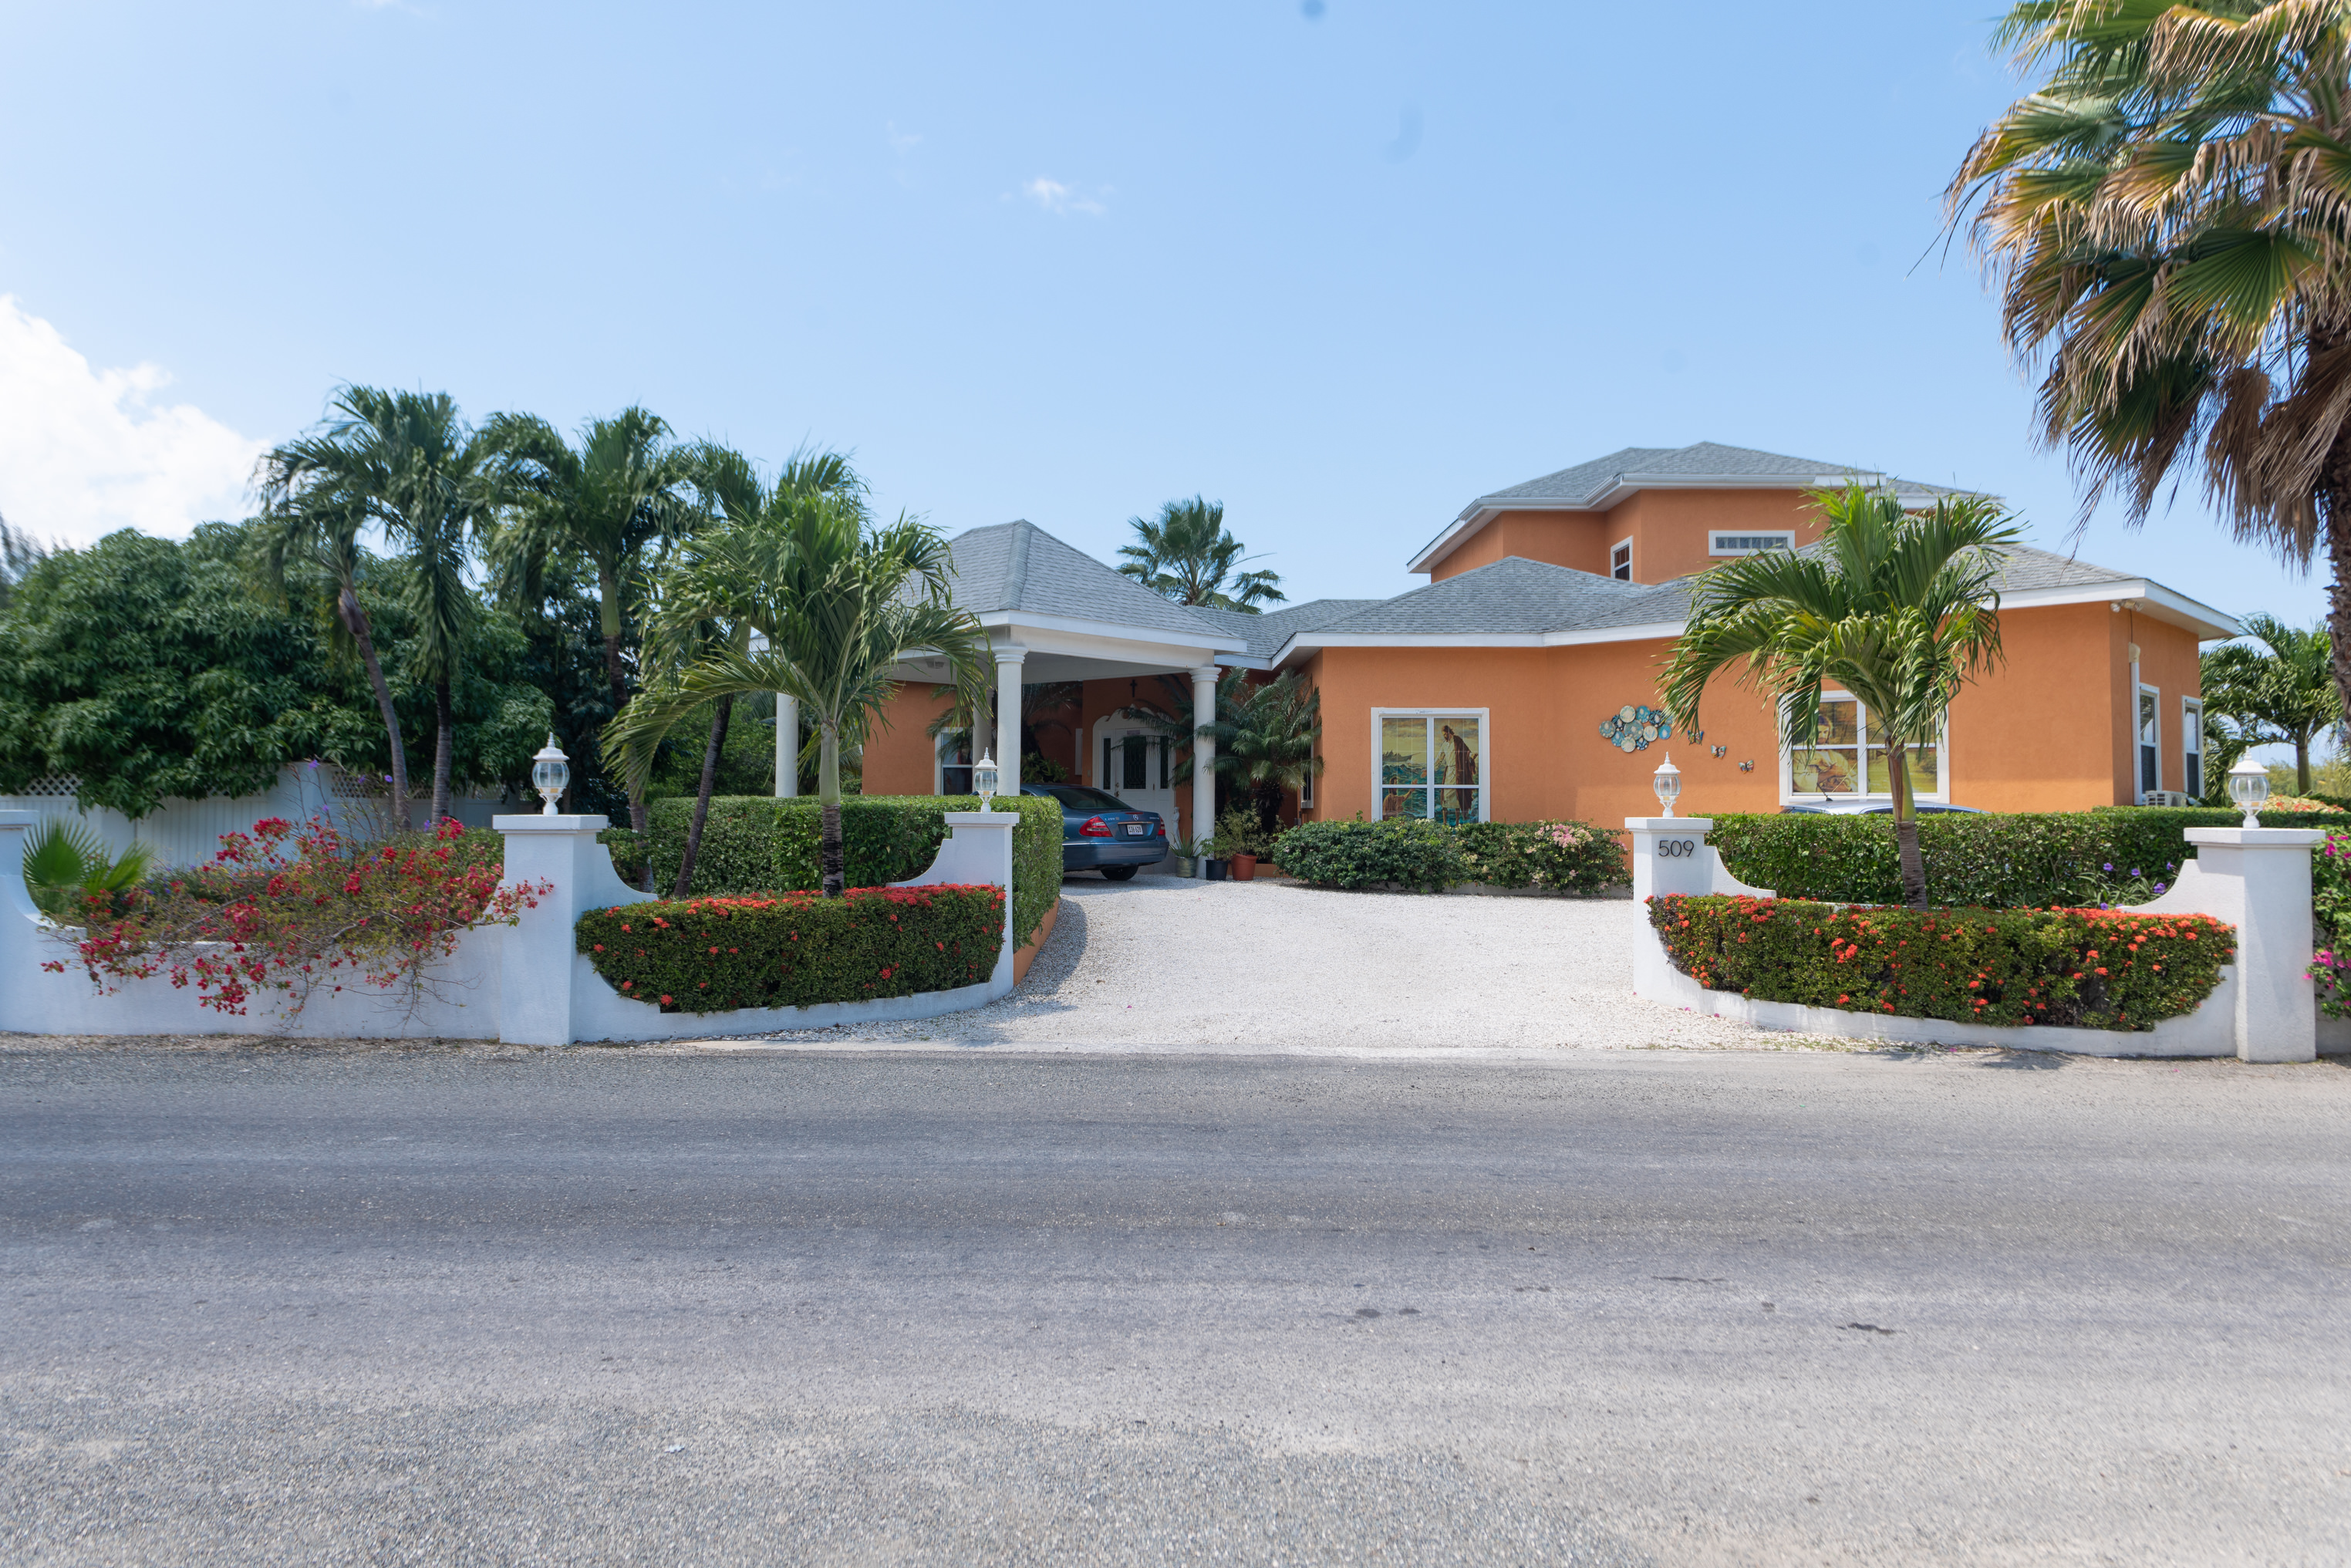  Caribbean Real Estate  Rentals ECayOnline